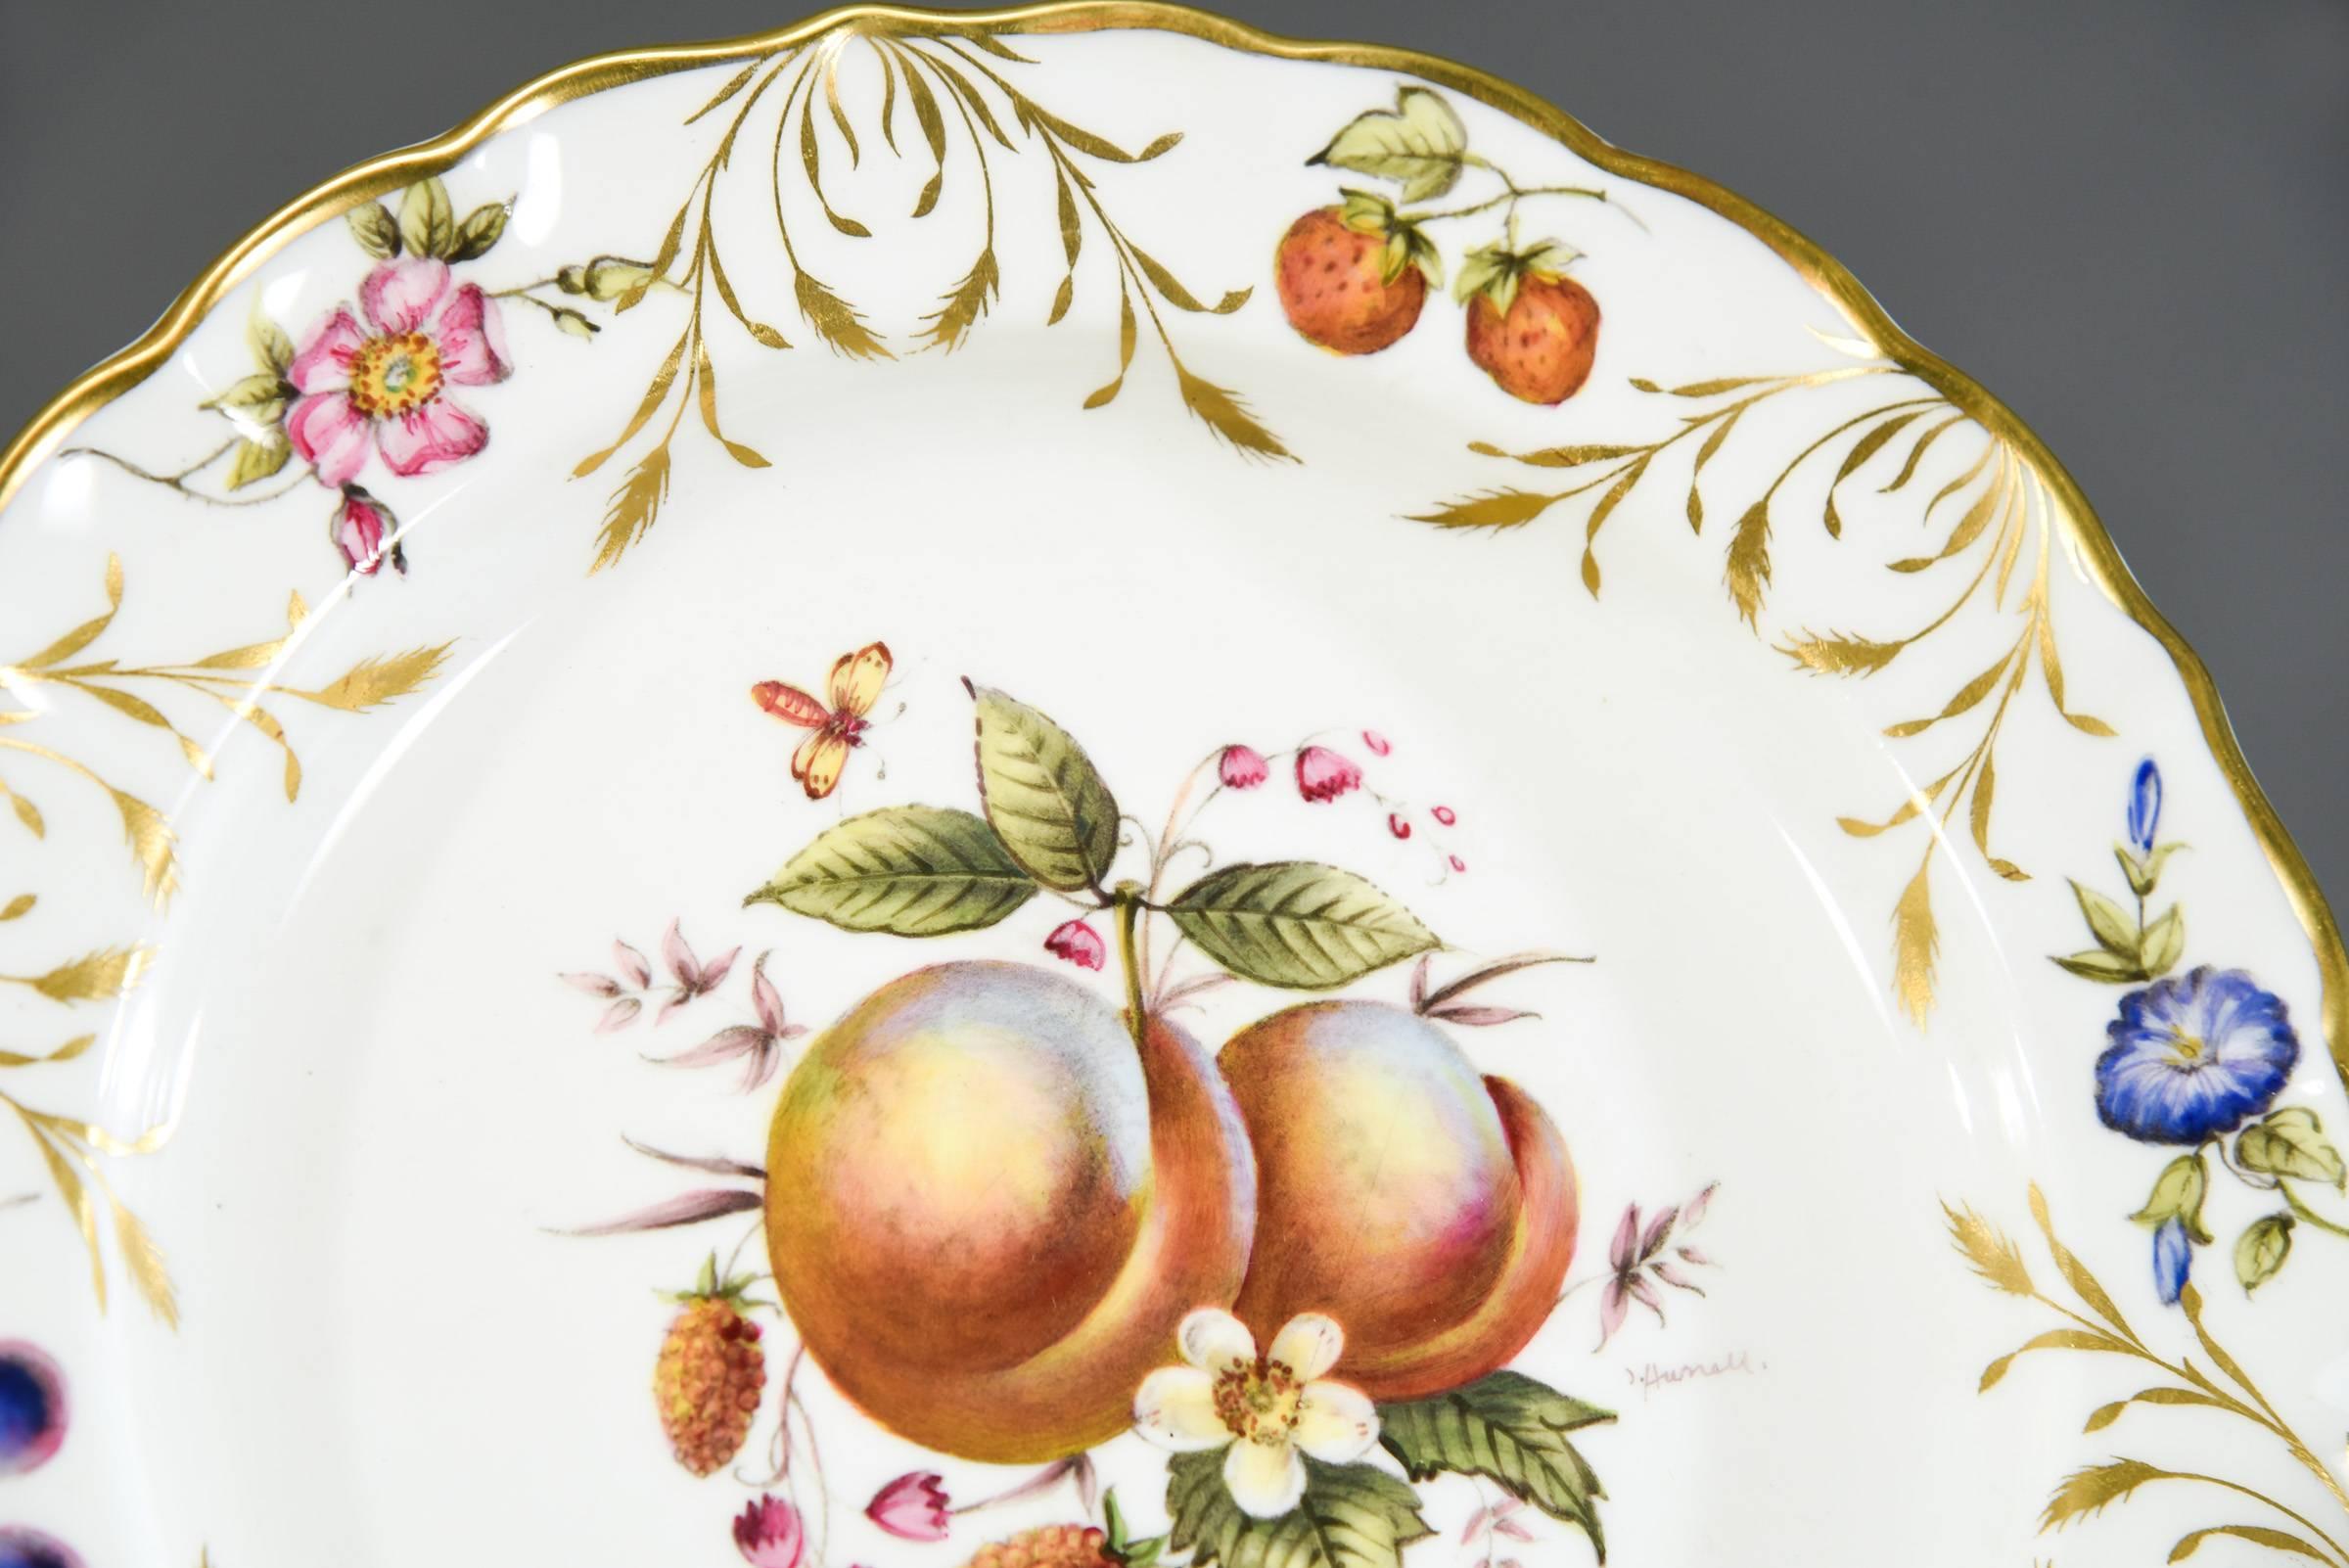 12 Royal Worcester Hand-Painted Dessert Plates with Fruit Artist Signed Hummel For Sale 1